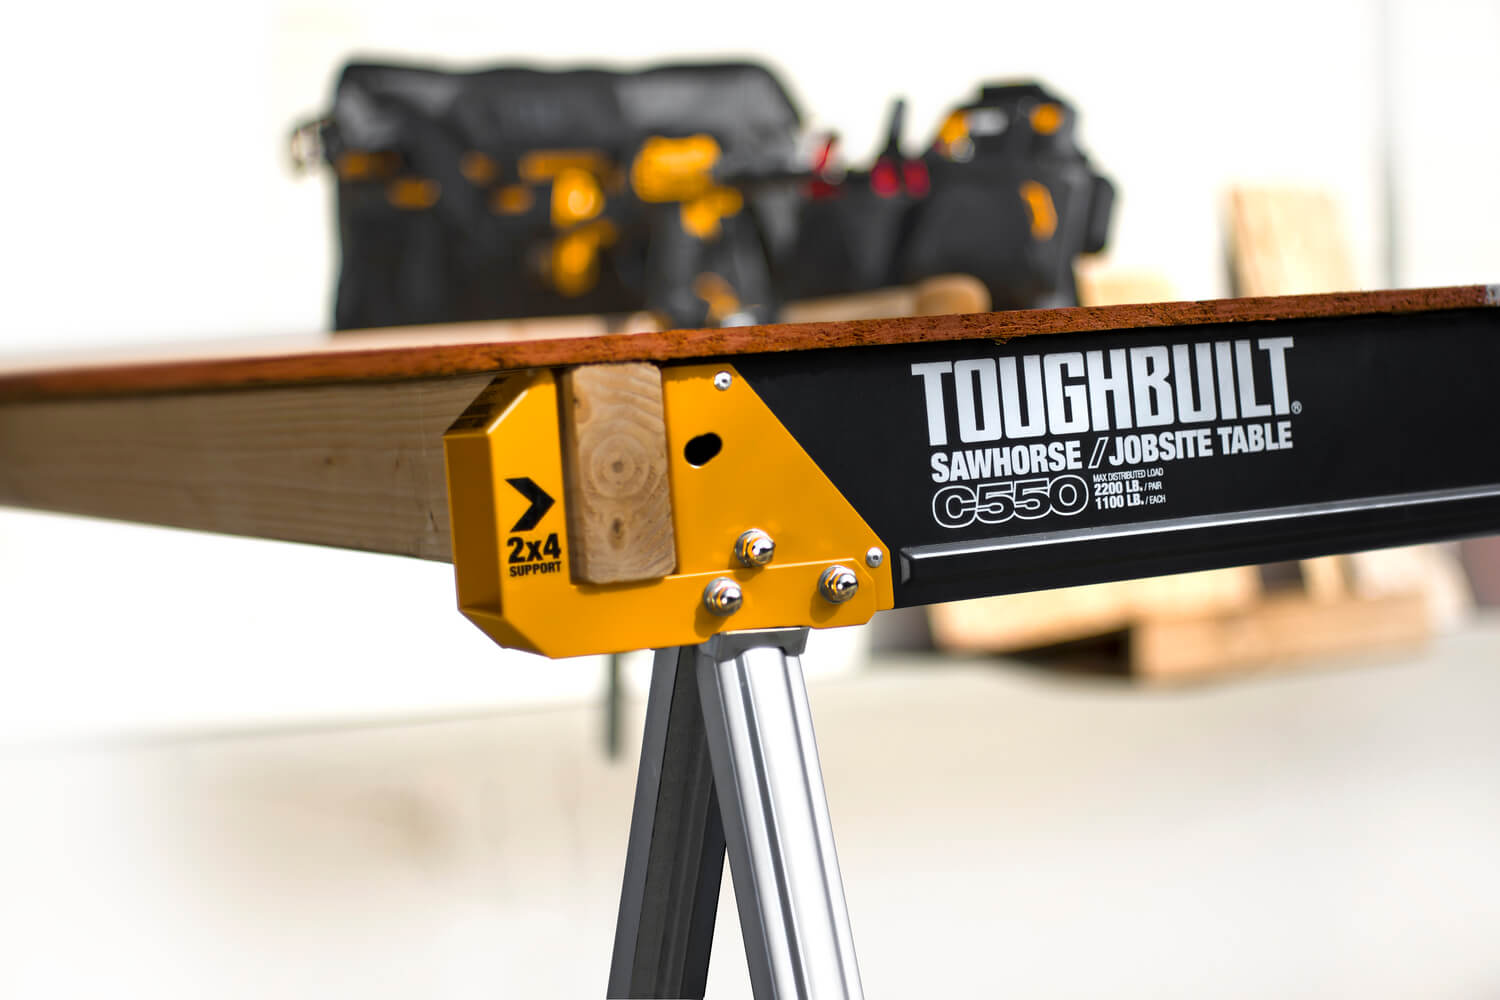 TOUGHBUILT C550 Sawhorse / Jobsite Table - wise-line-tools